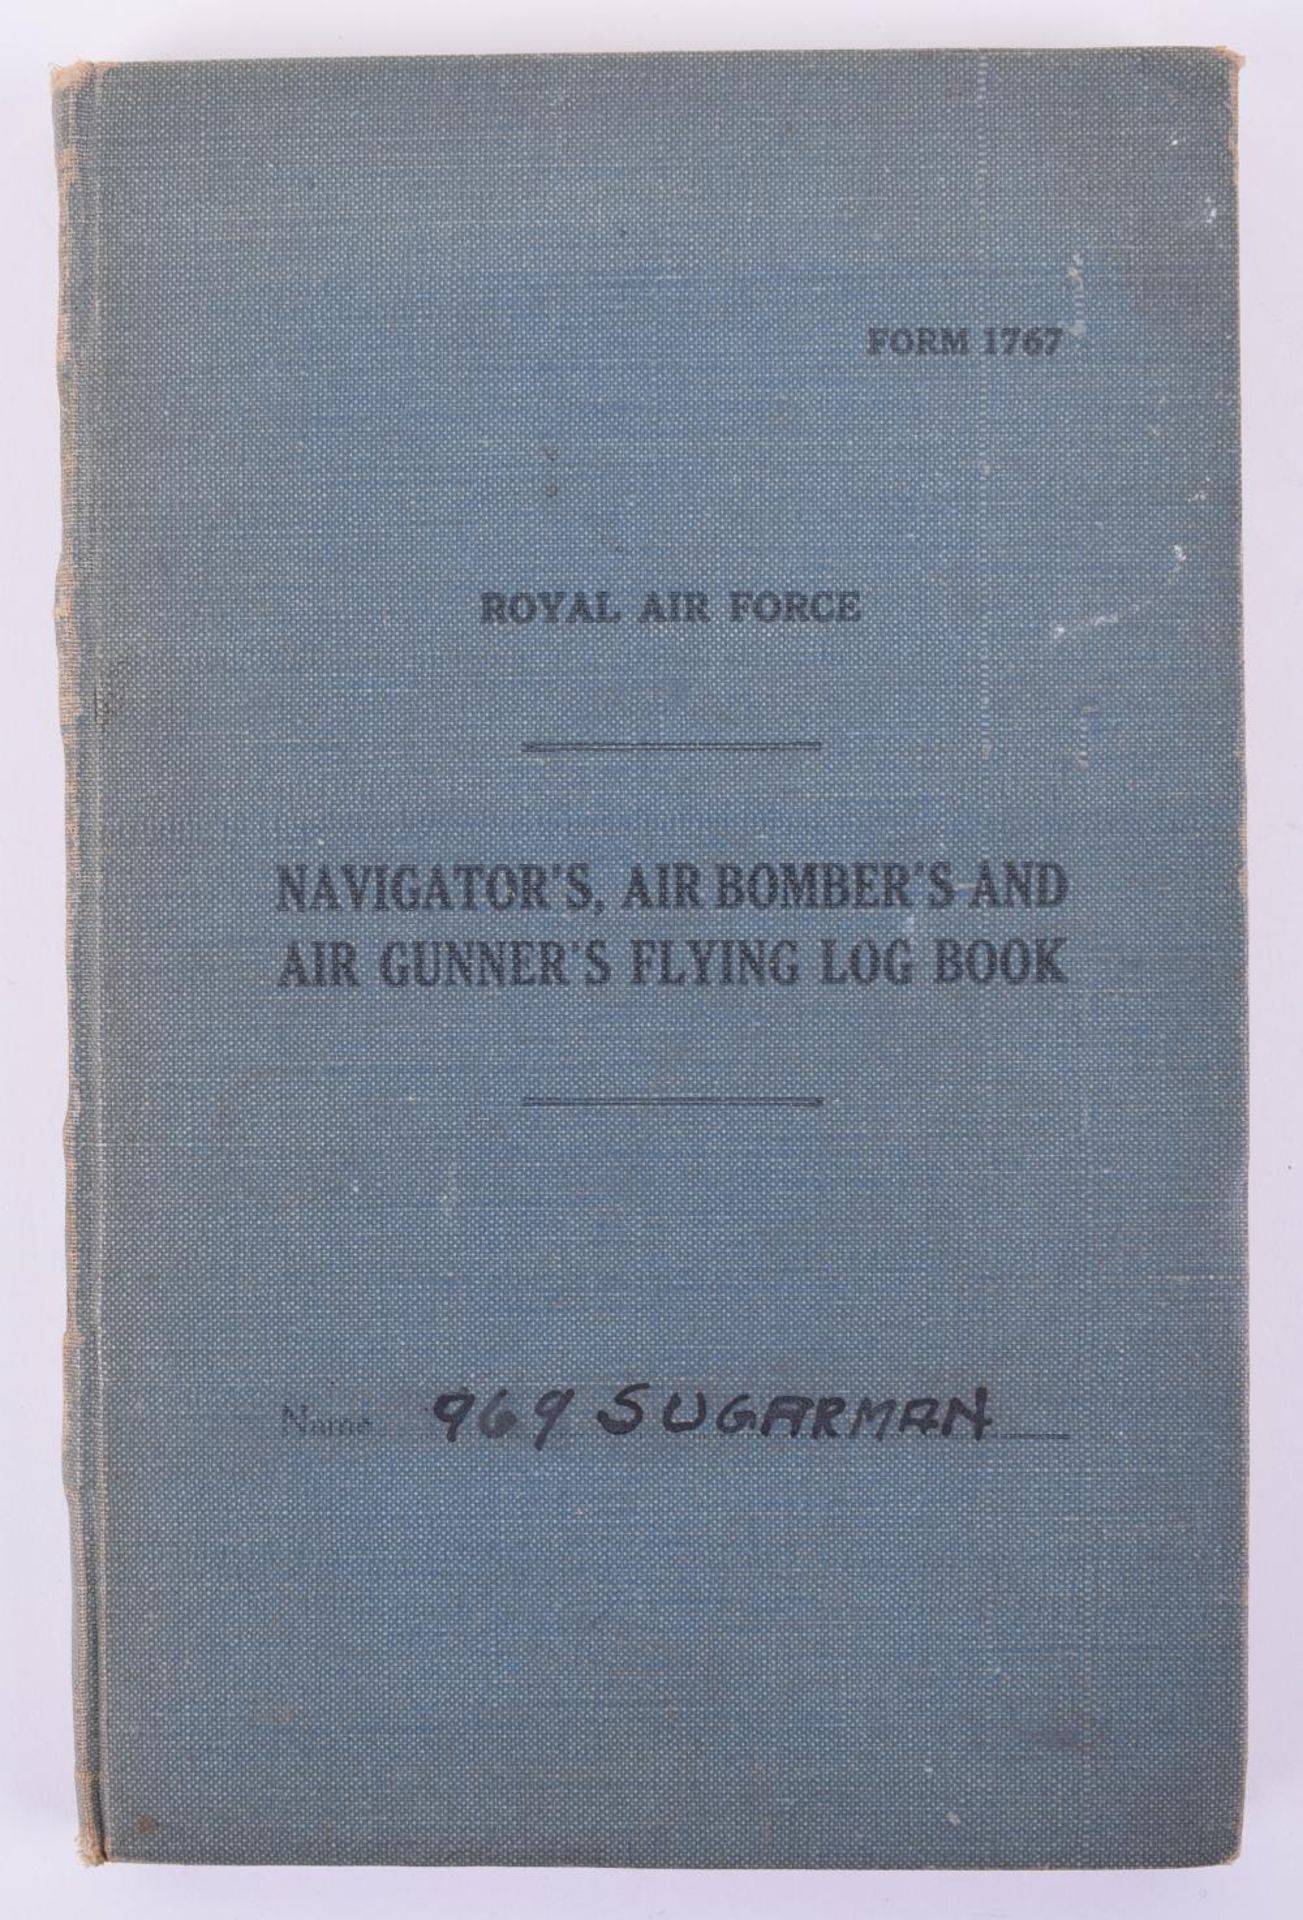 Royal Air Force Navigators, Air Bombers and Air Gunners Flying Log Book of 1583969 W/Op A Sugarman p - Image 2 of 6